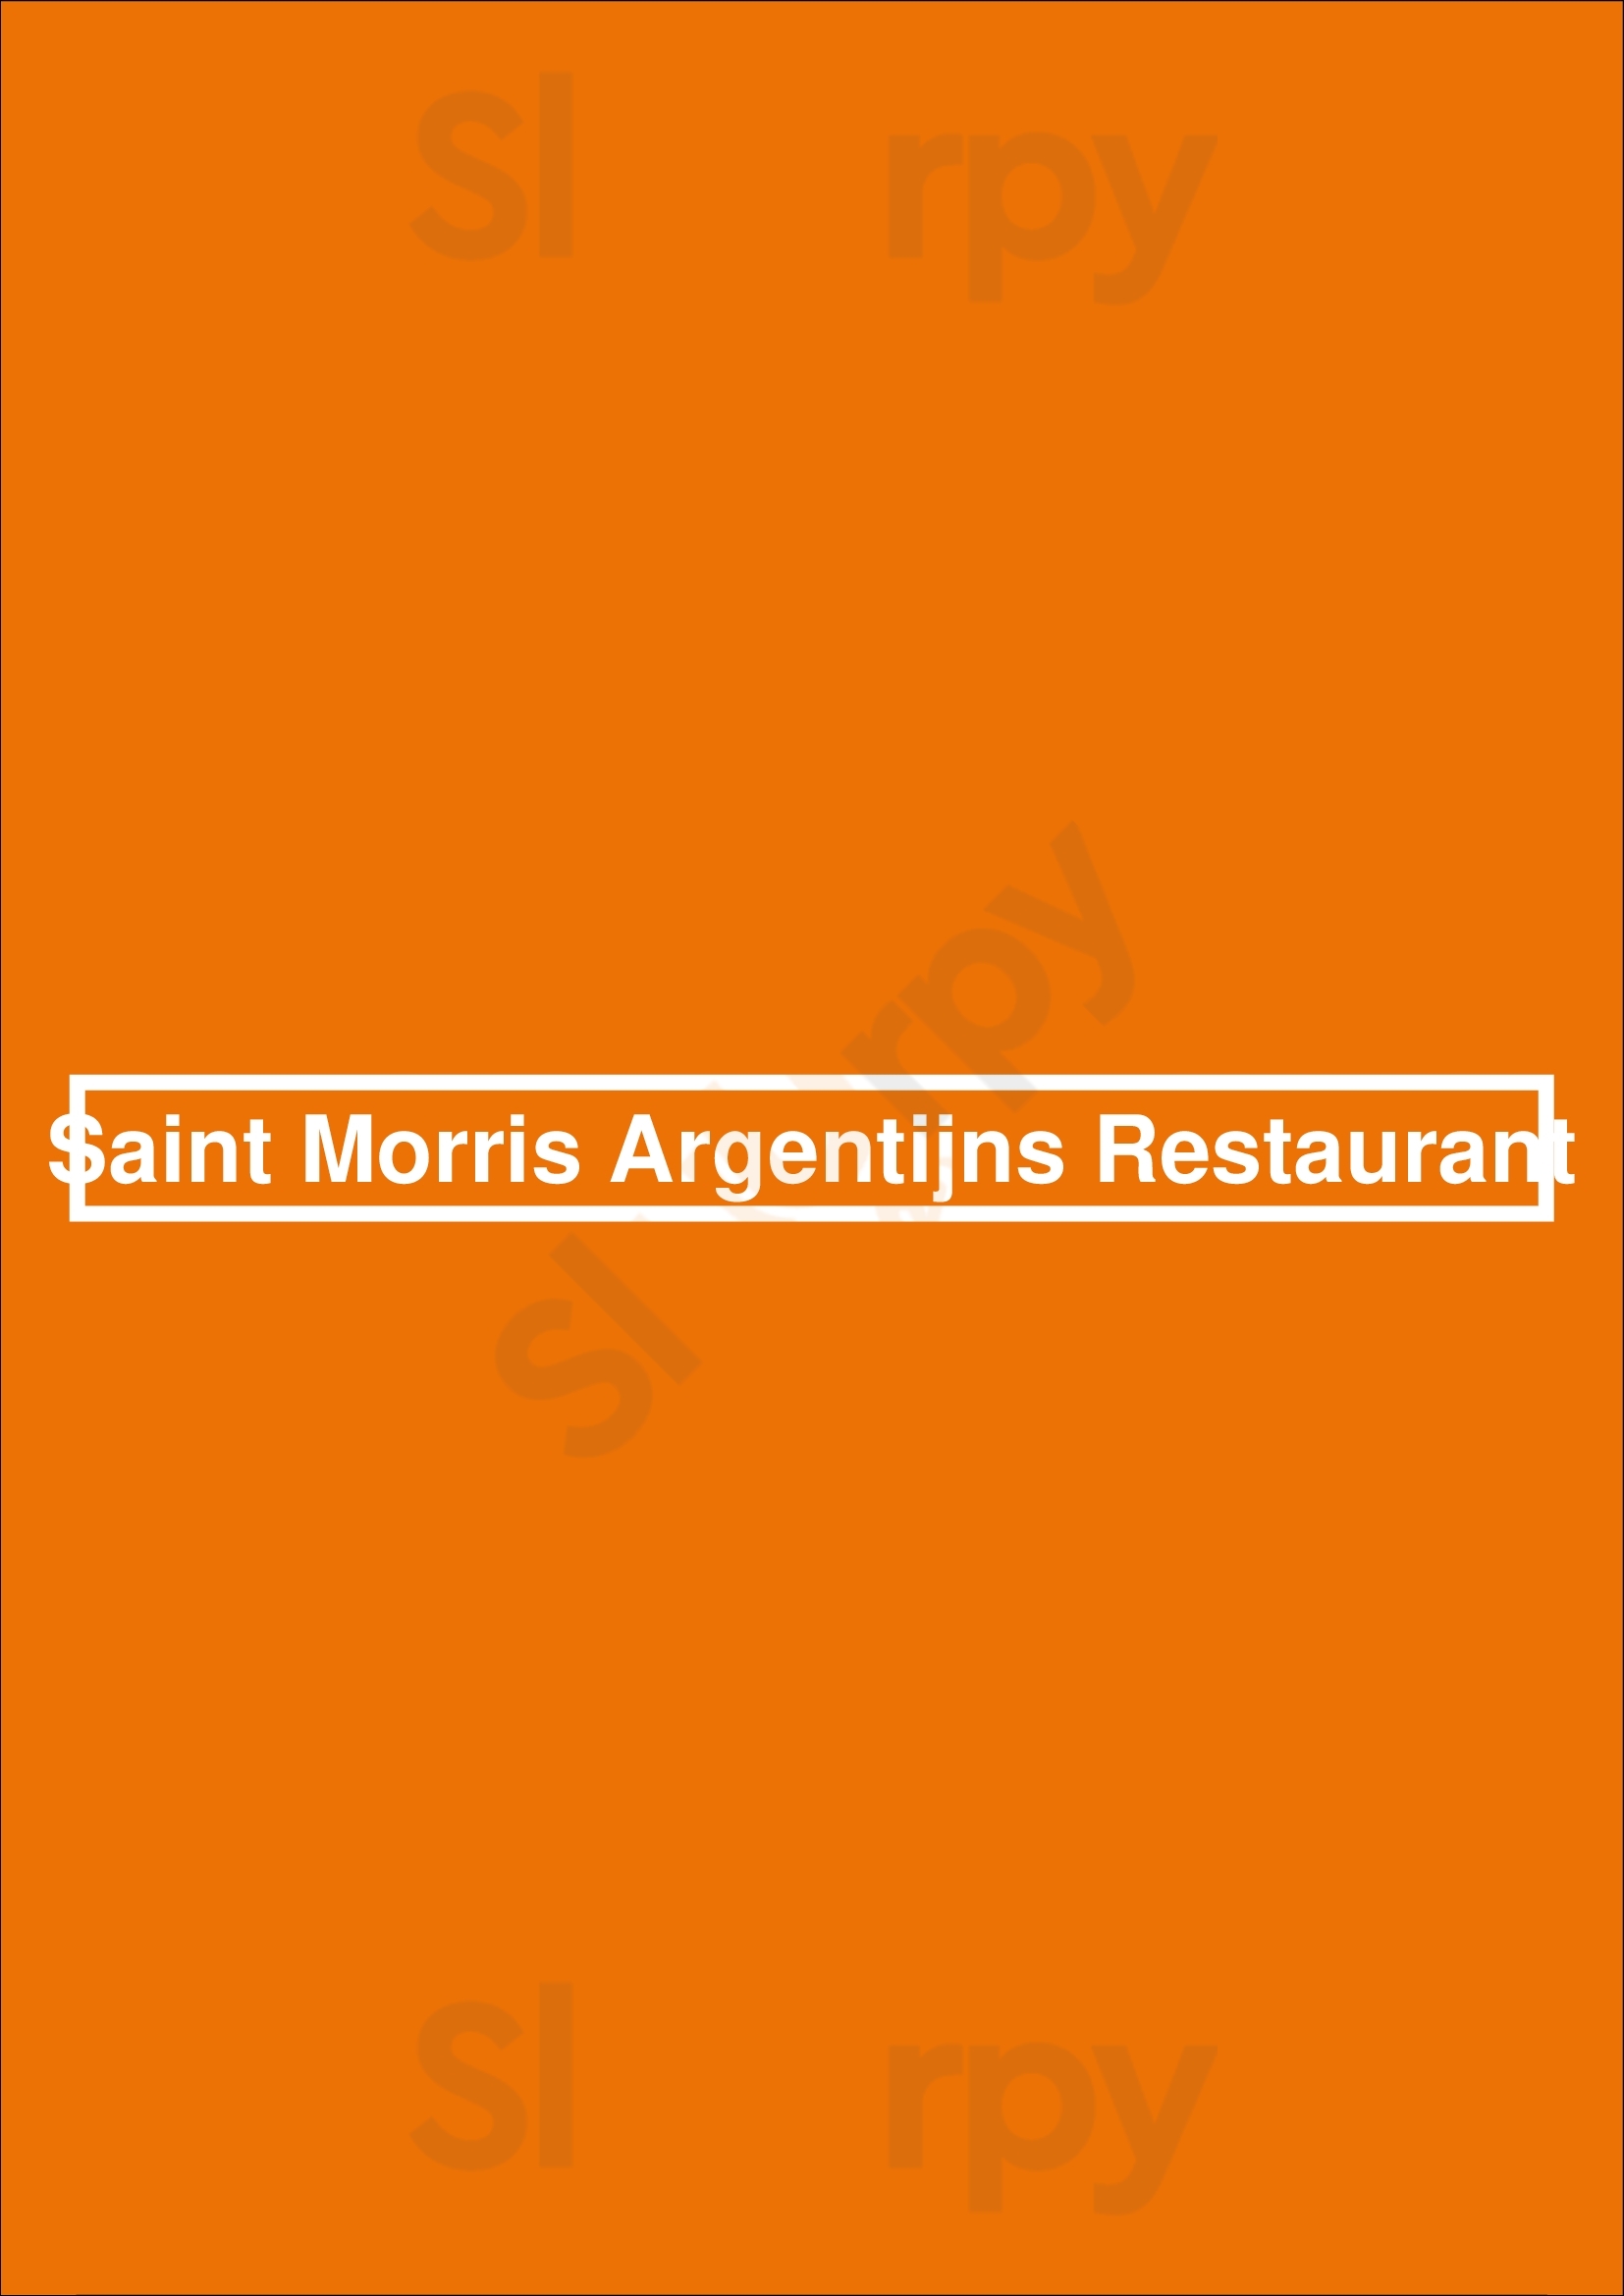 Saint Morris Argentijns Restaurant Amsterdam Menu - 1